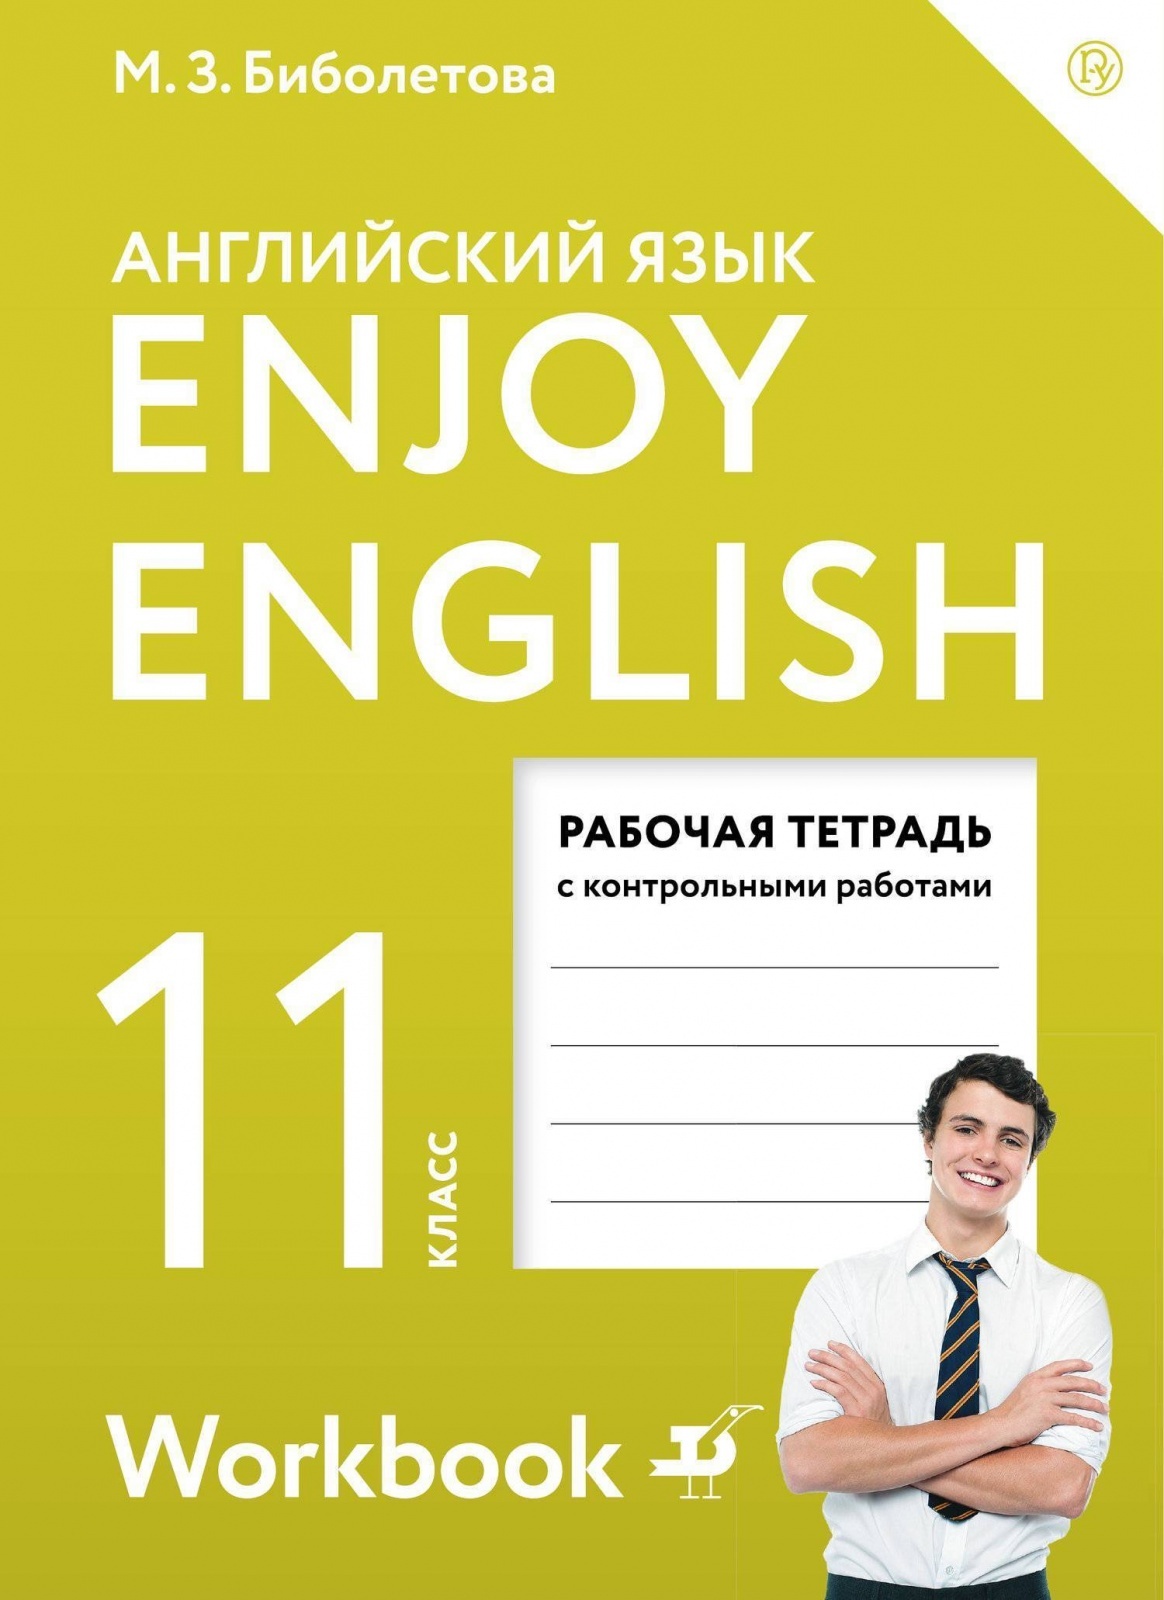 Английский язык 5 класс энджой инглиш. Enjoy English 11 класс. Английский язык enjoy English. Enjoy English 11 класс рабочая тетрадь. Английский язык 11 класс рабочая тетрадь.